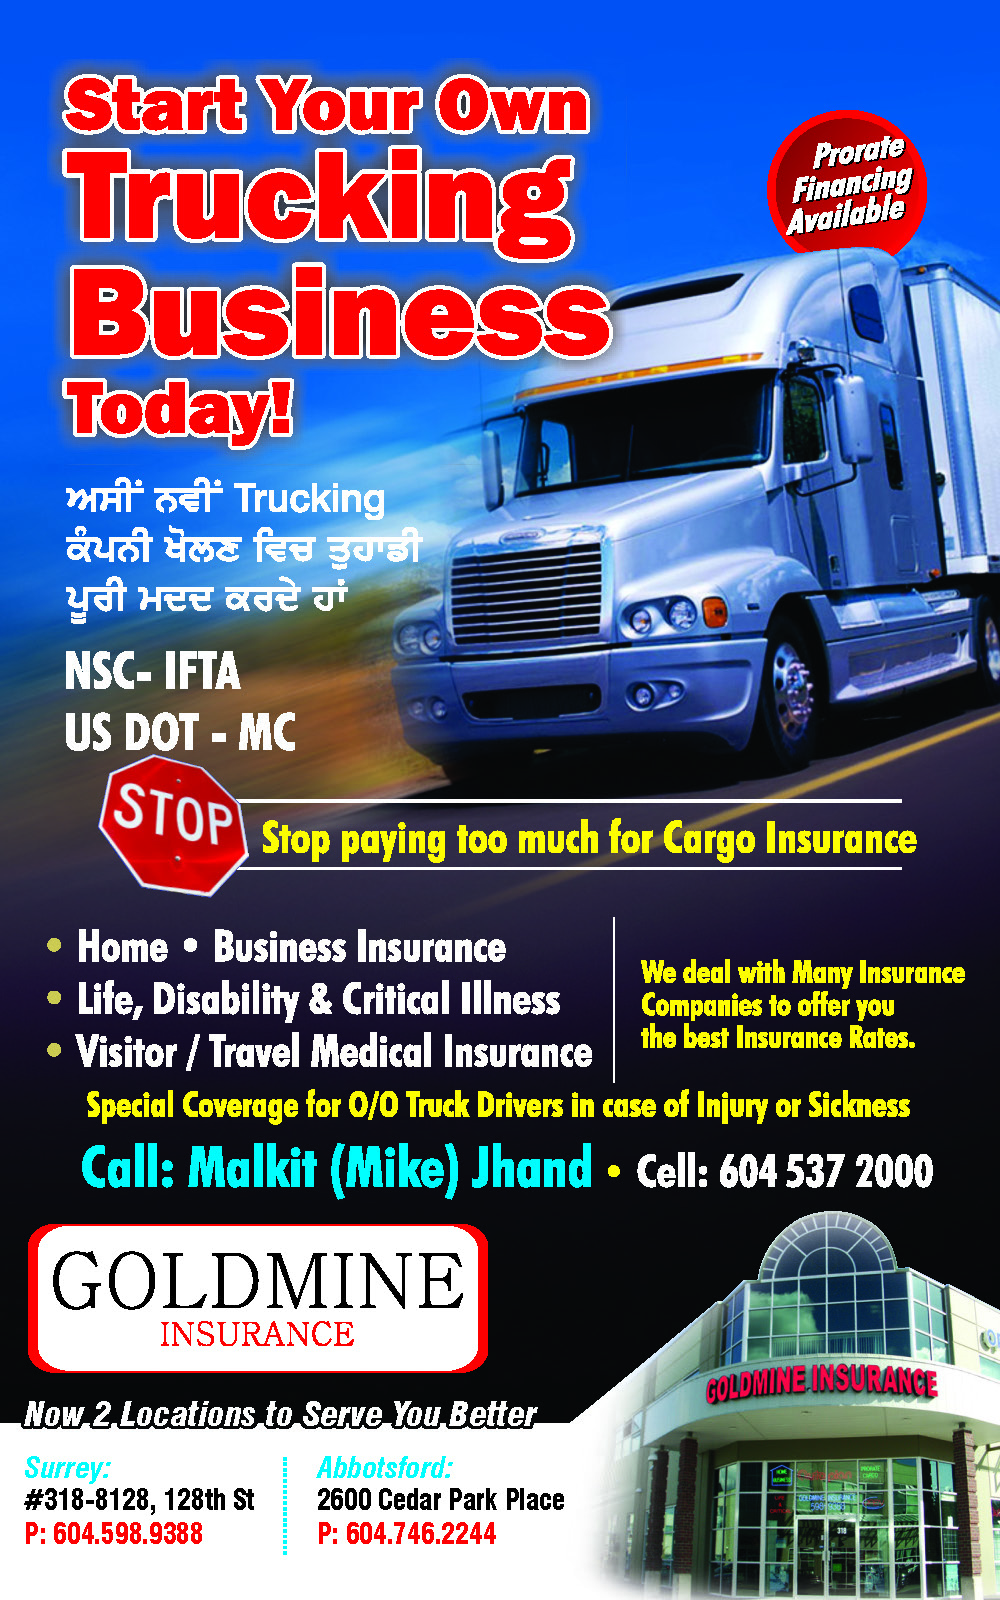 goldmine-insurance-services-ltd-UahC5Sq.jpeg